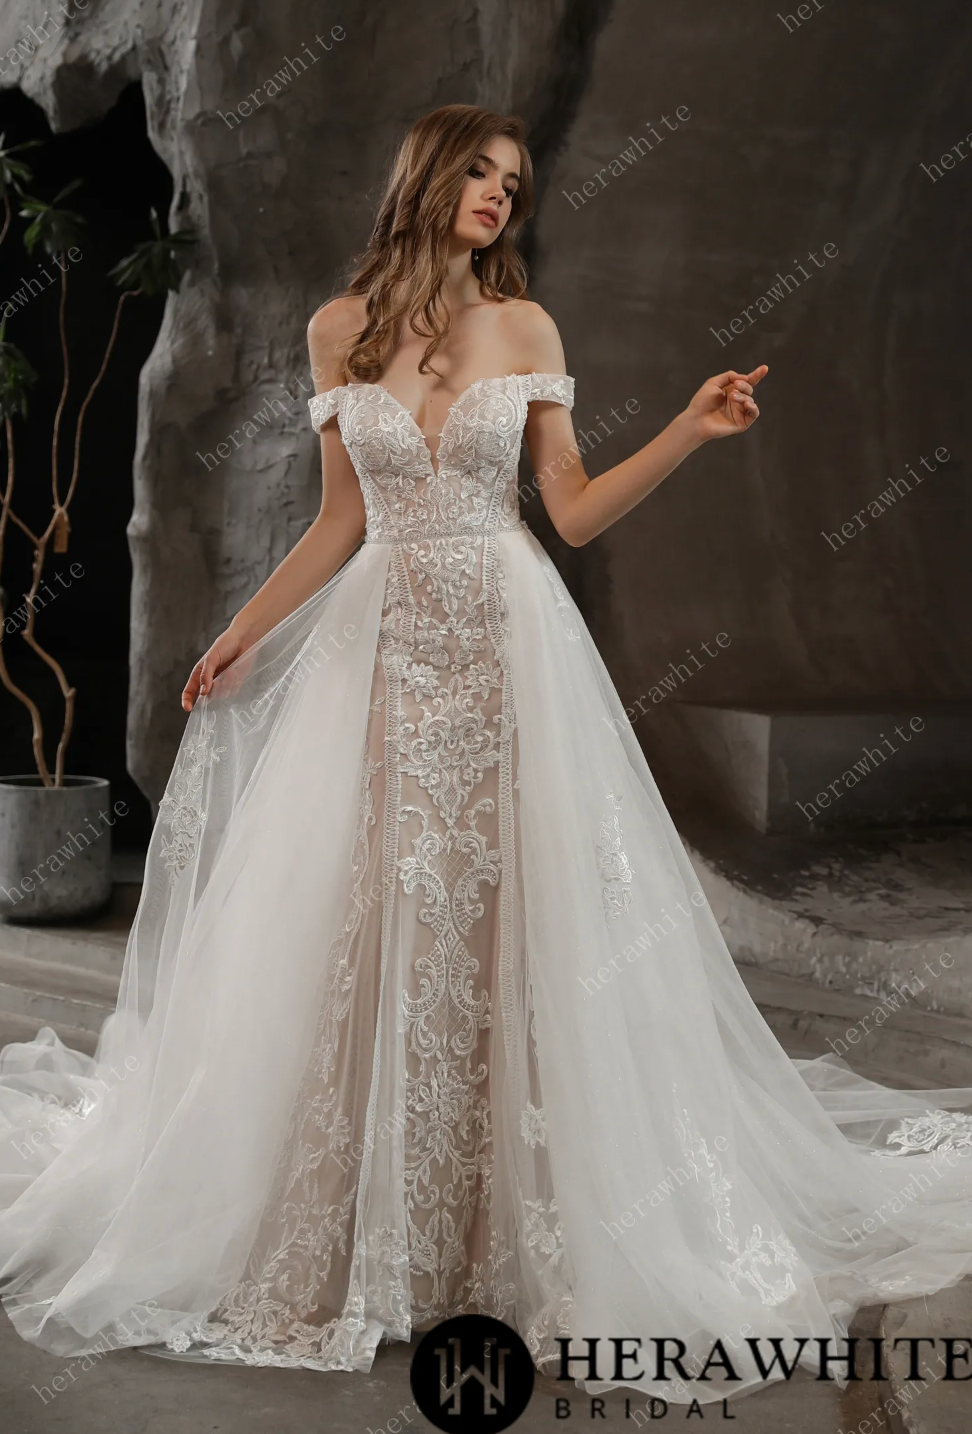 Strapless Lace Corset Ball Gown Wedding Dress | Kleinfeld Bridal